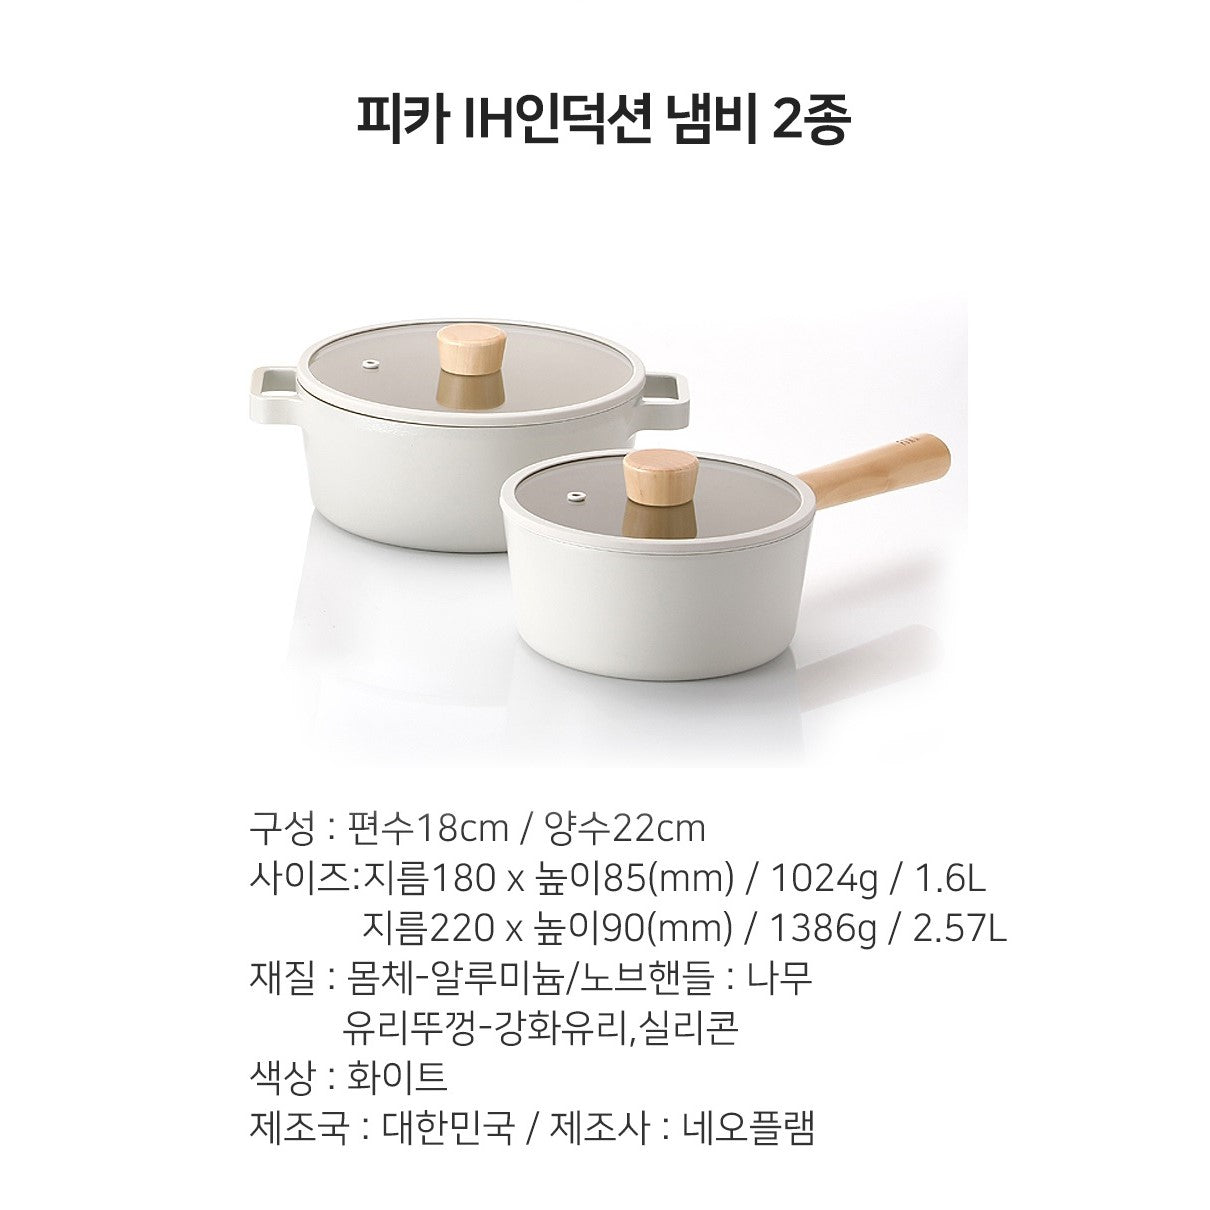 FIKA Cookware - no PFOA, PFOS ingredients (Made in Korea)